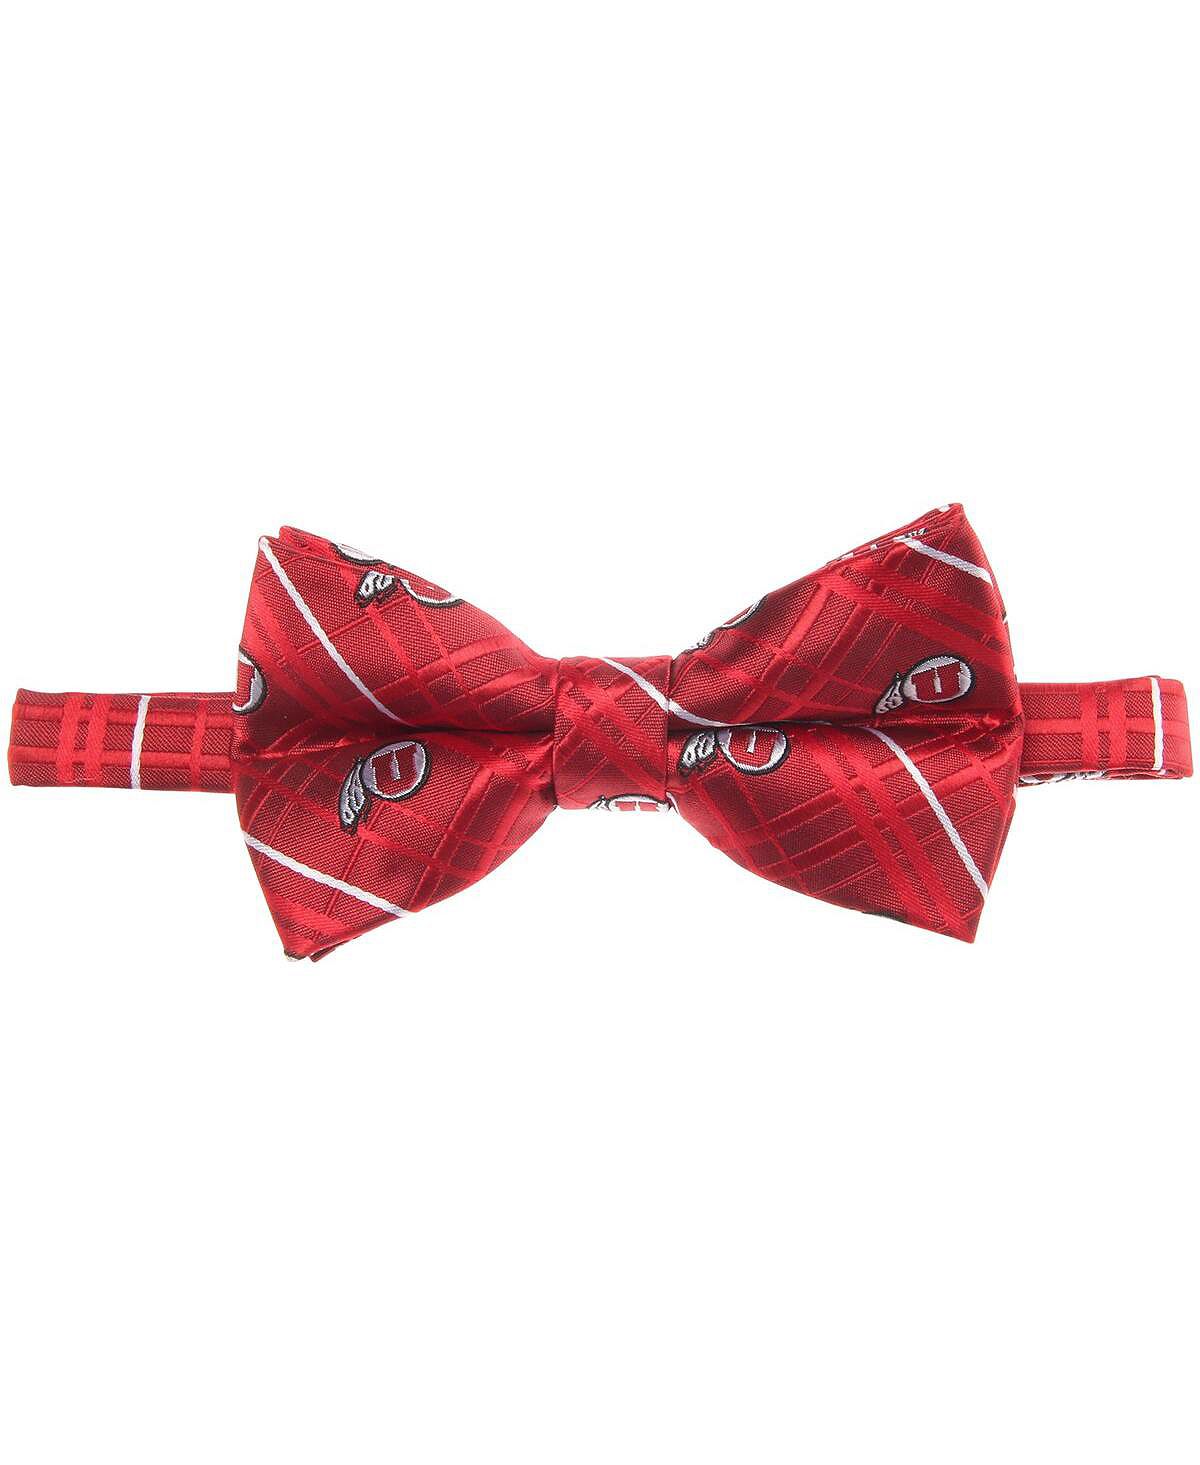 Мужской красный галстук-бабочка Utah Utes Oxford Eagles Wings юта текс